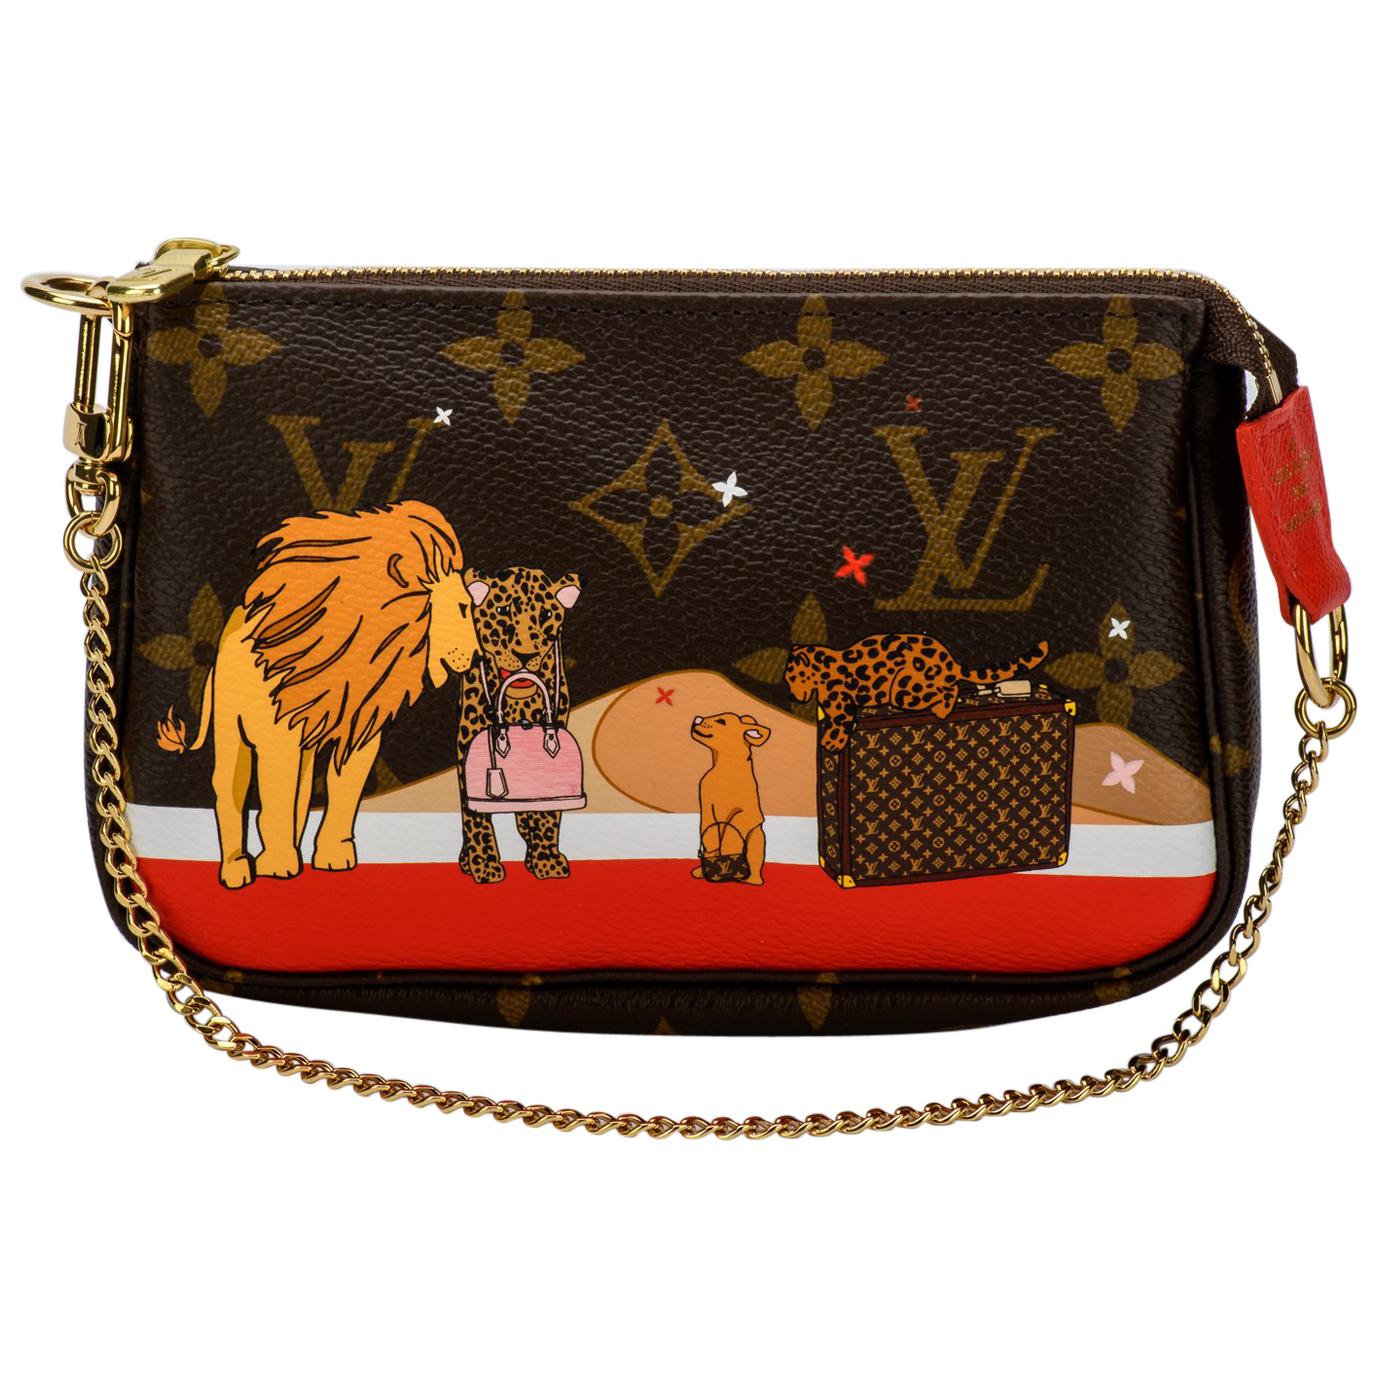 New in Box Louis Vuitton Limited Edition Lions Ghepards Pouchette Bag